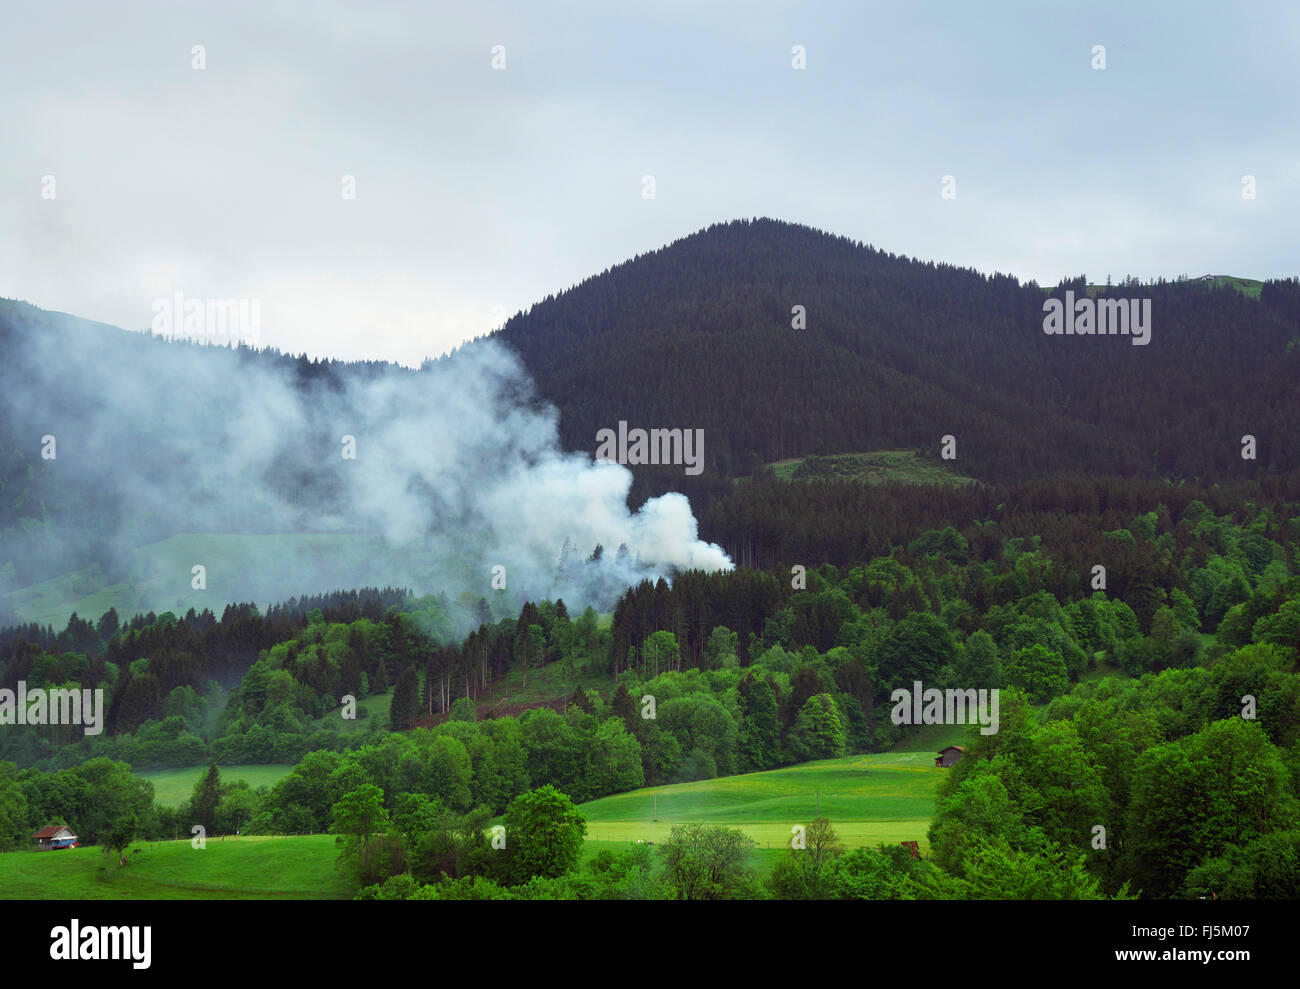 view to Hoernle mountain, forest fire with dense smoke, Germany, Bavaria, Oberbayern, Upper Bavaria, Bad Kohlgrub Stock Photo